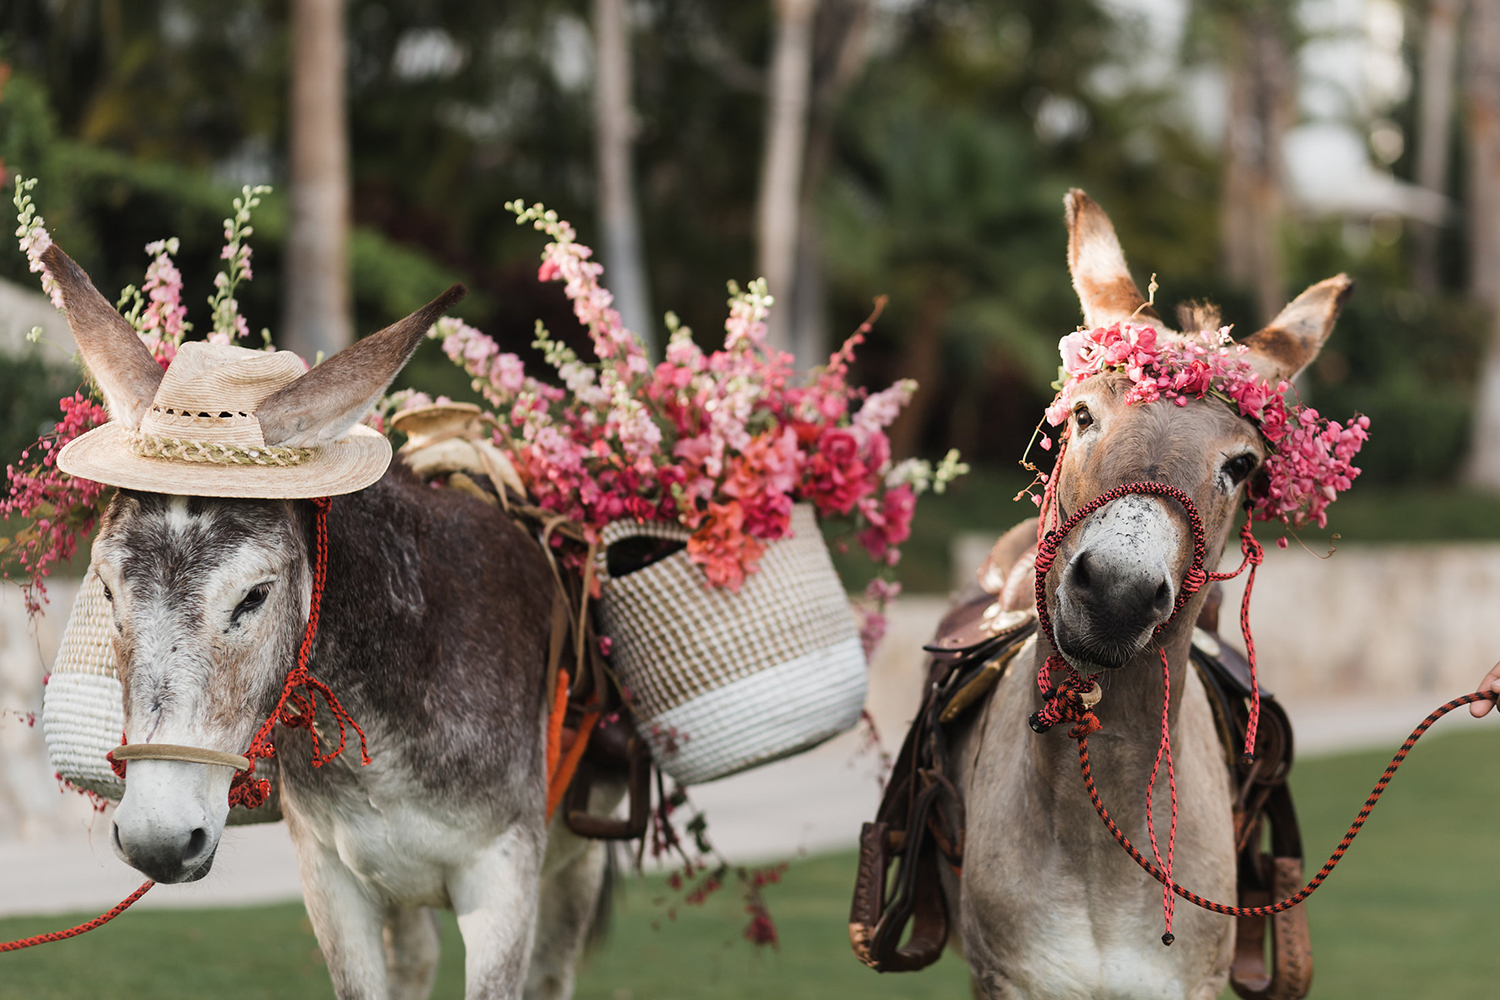 beer burros - donkeys - flower crowns - destination wedding - animals - pets in weddings